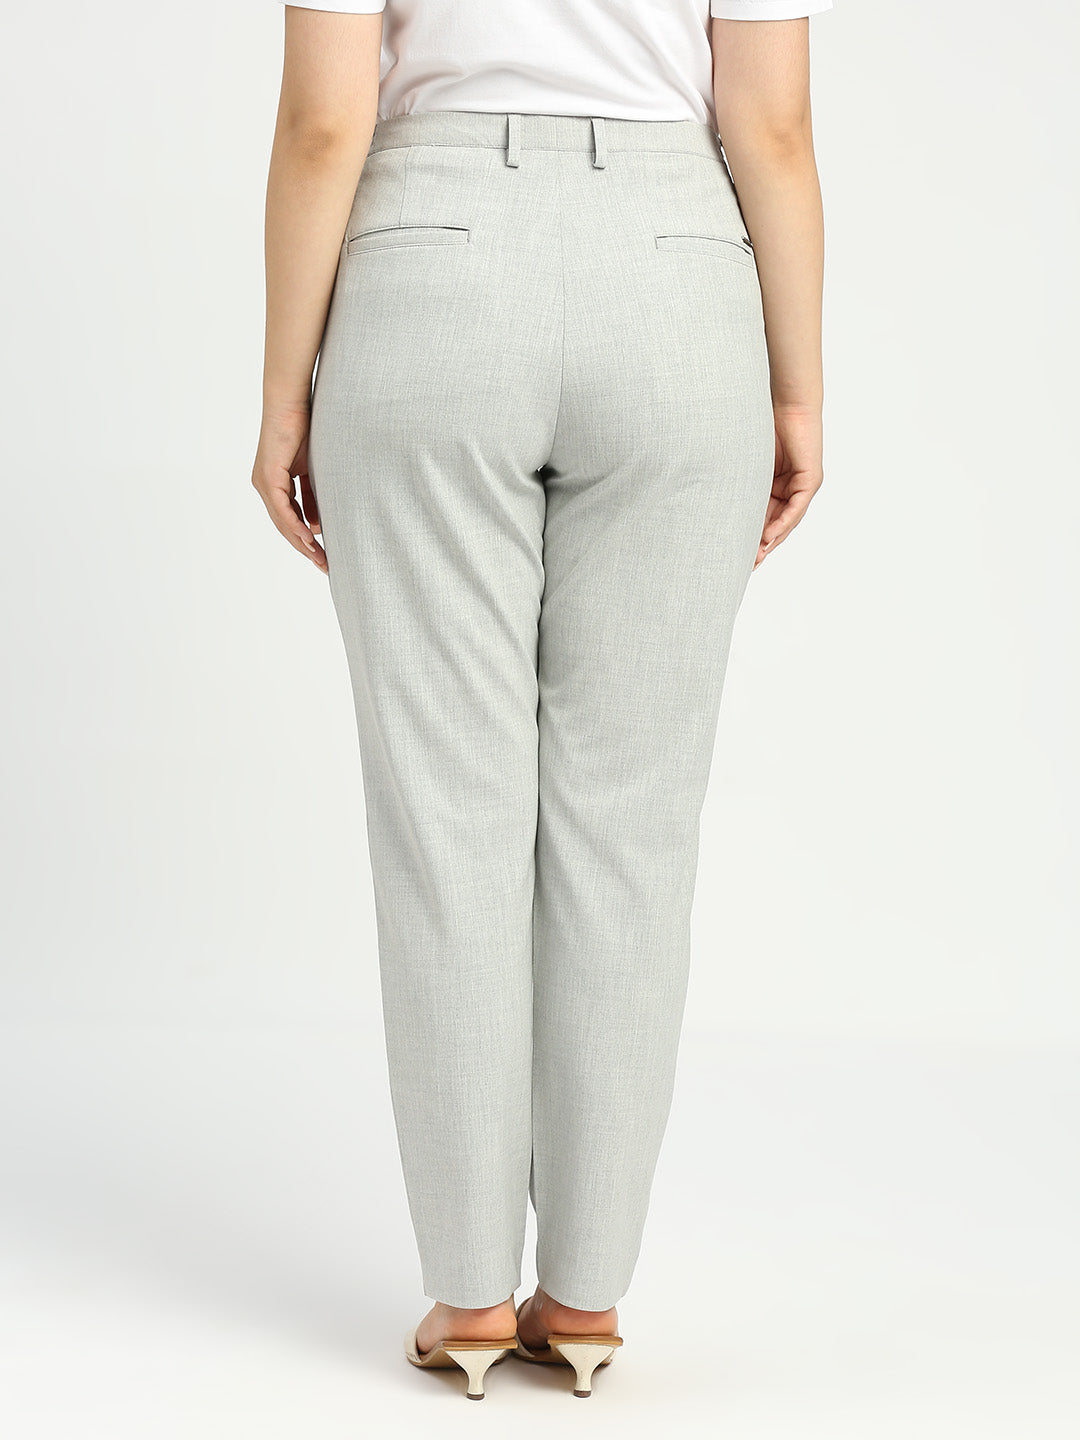 Hyperflex Grey Melange Eclectic Trouser - For Women